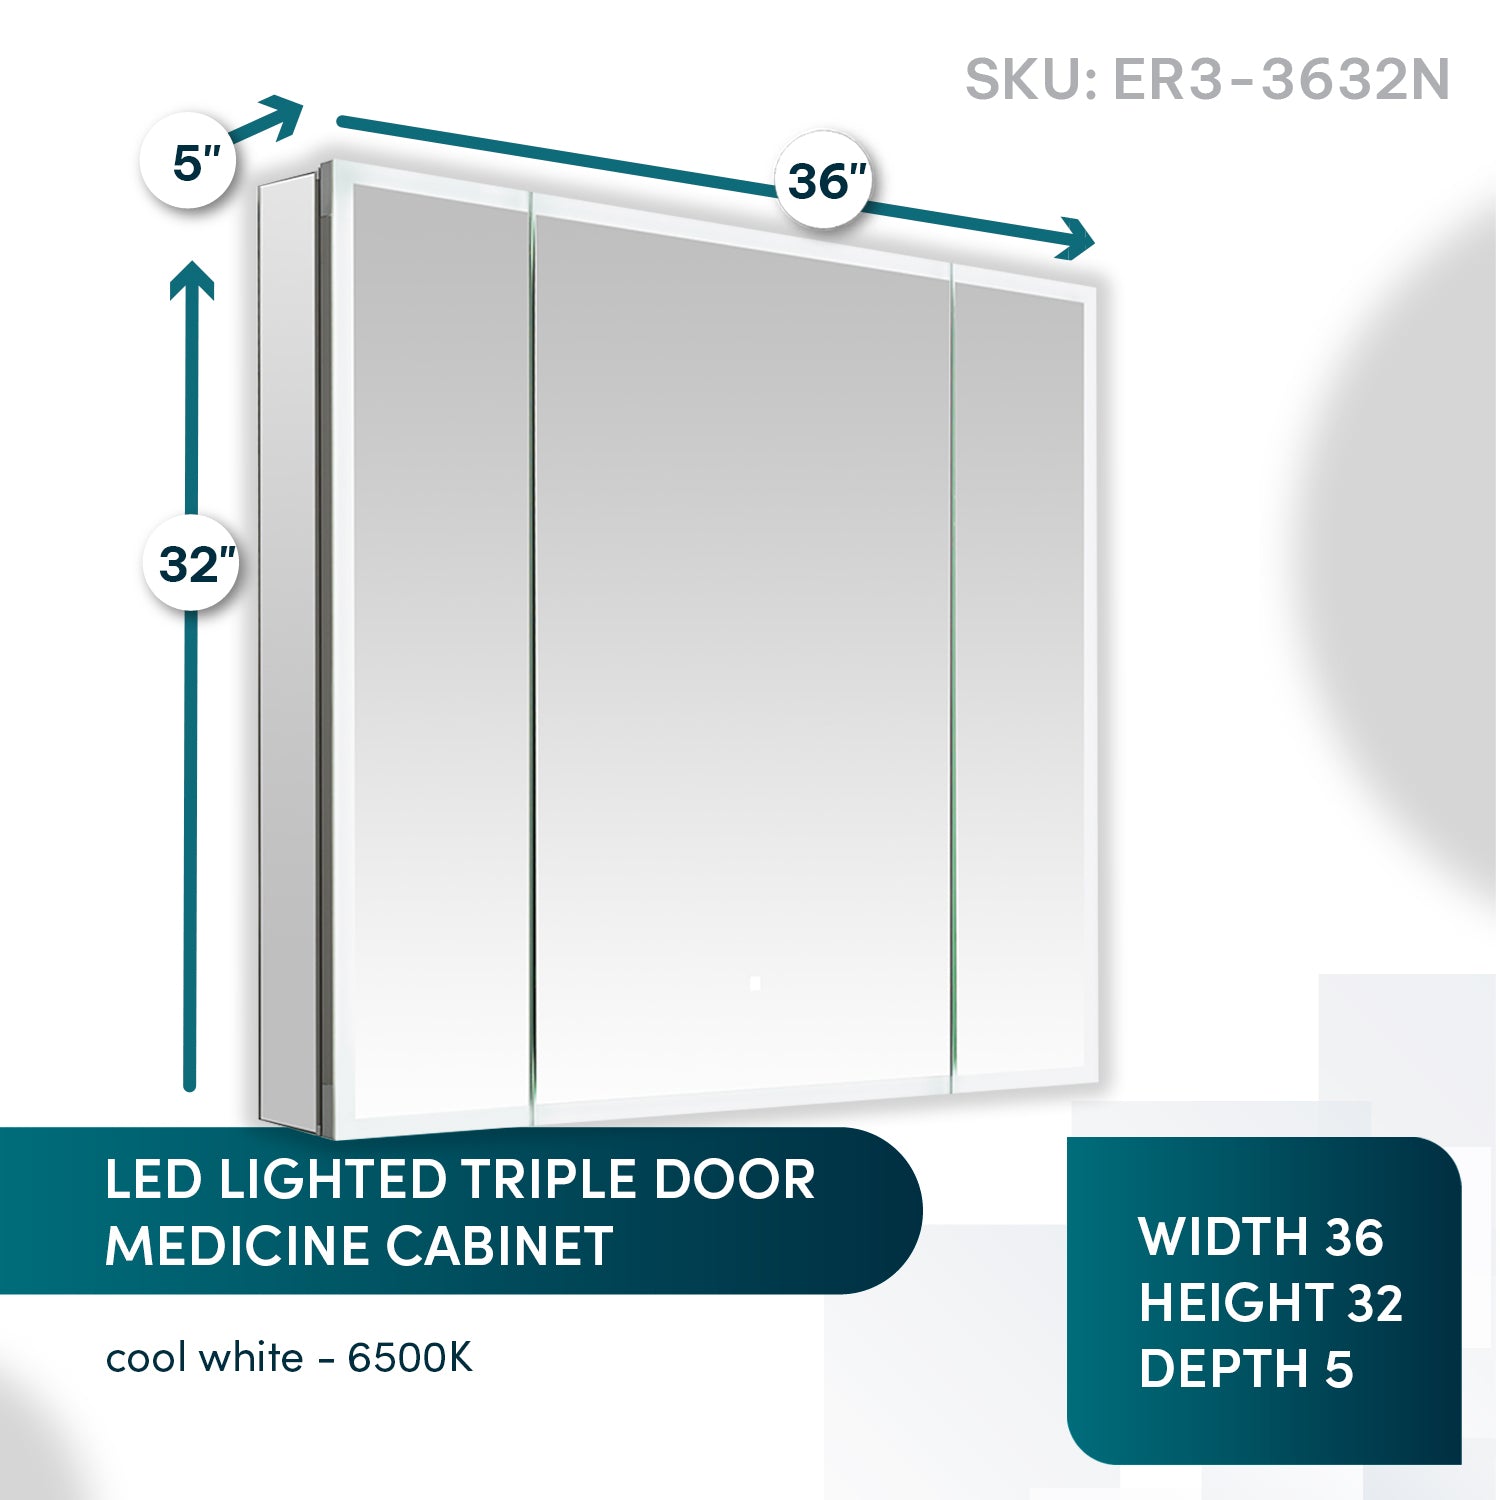 Aquadom Edge Royale 36x32 LED Lighted Triple Door Medicine Cabinet